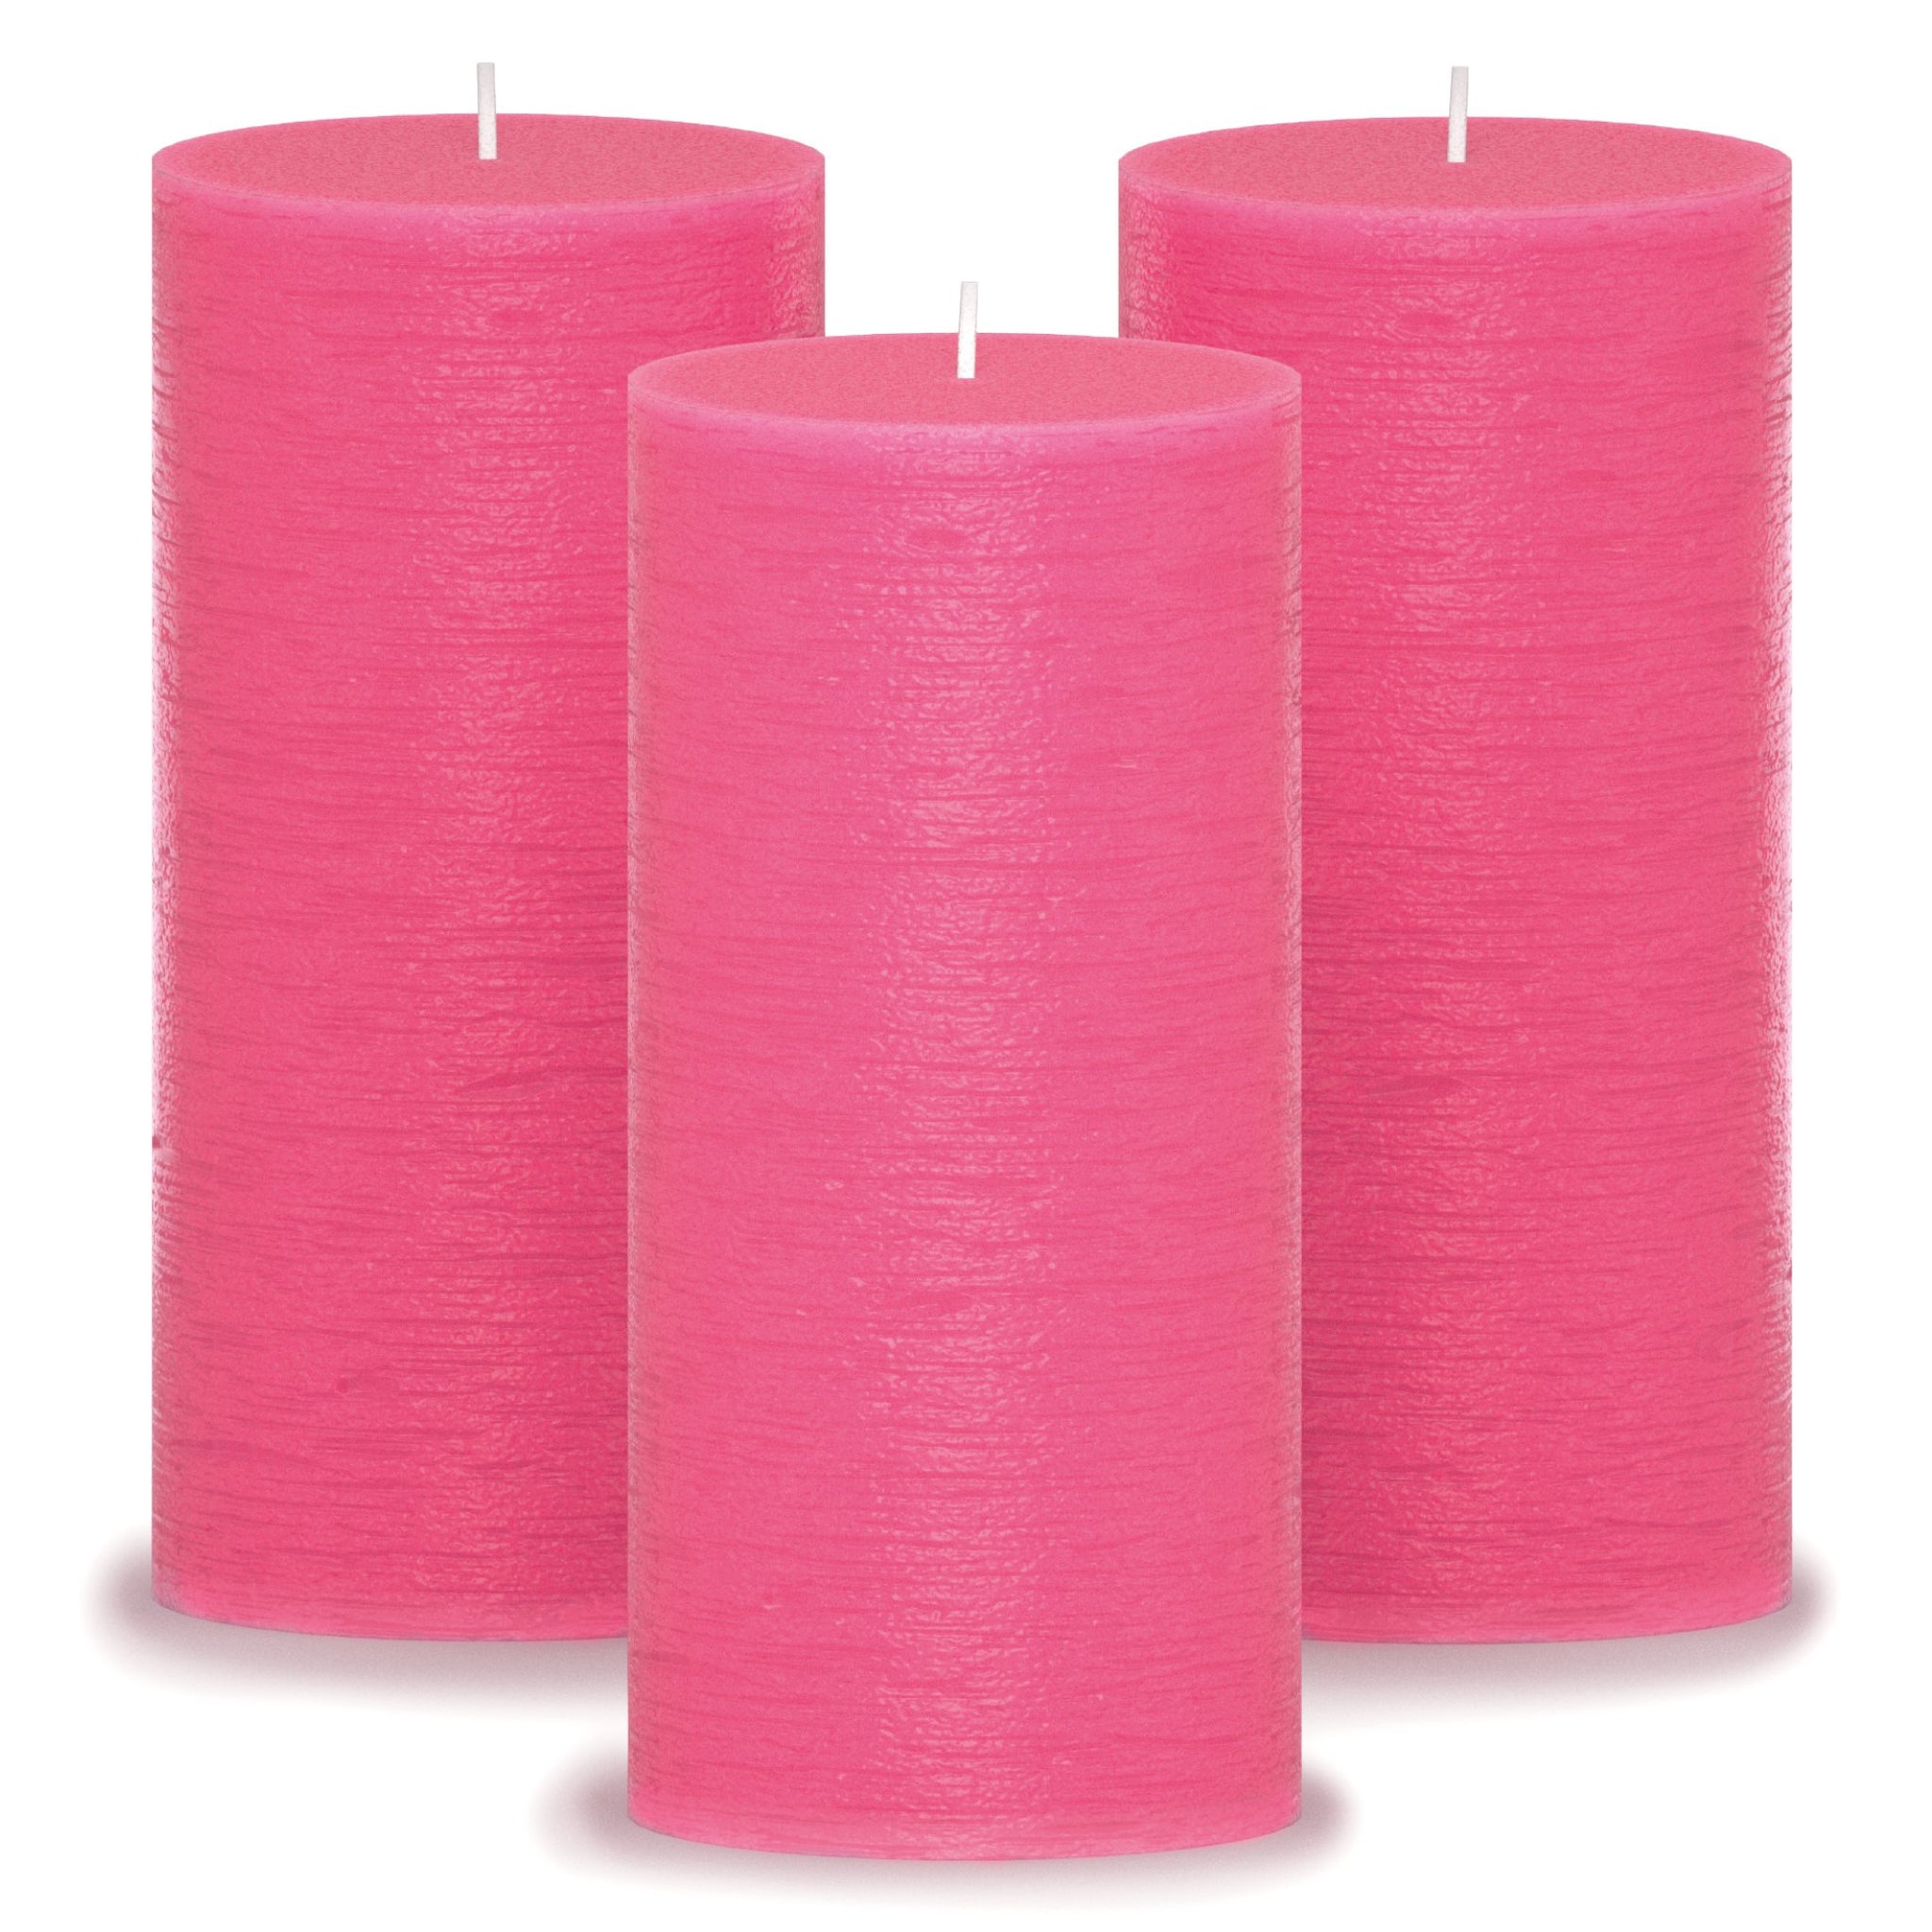 CANDWAX Pink Pillar Candles 6" - Set of 3pcs